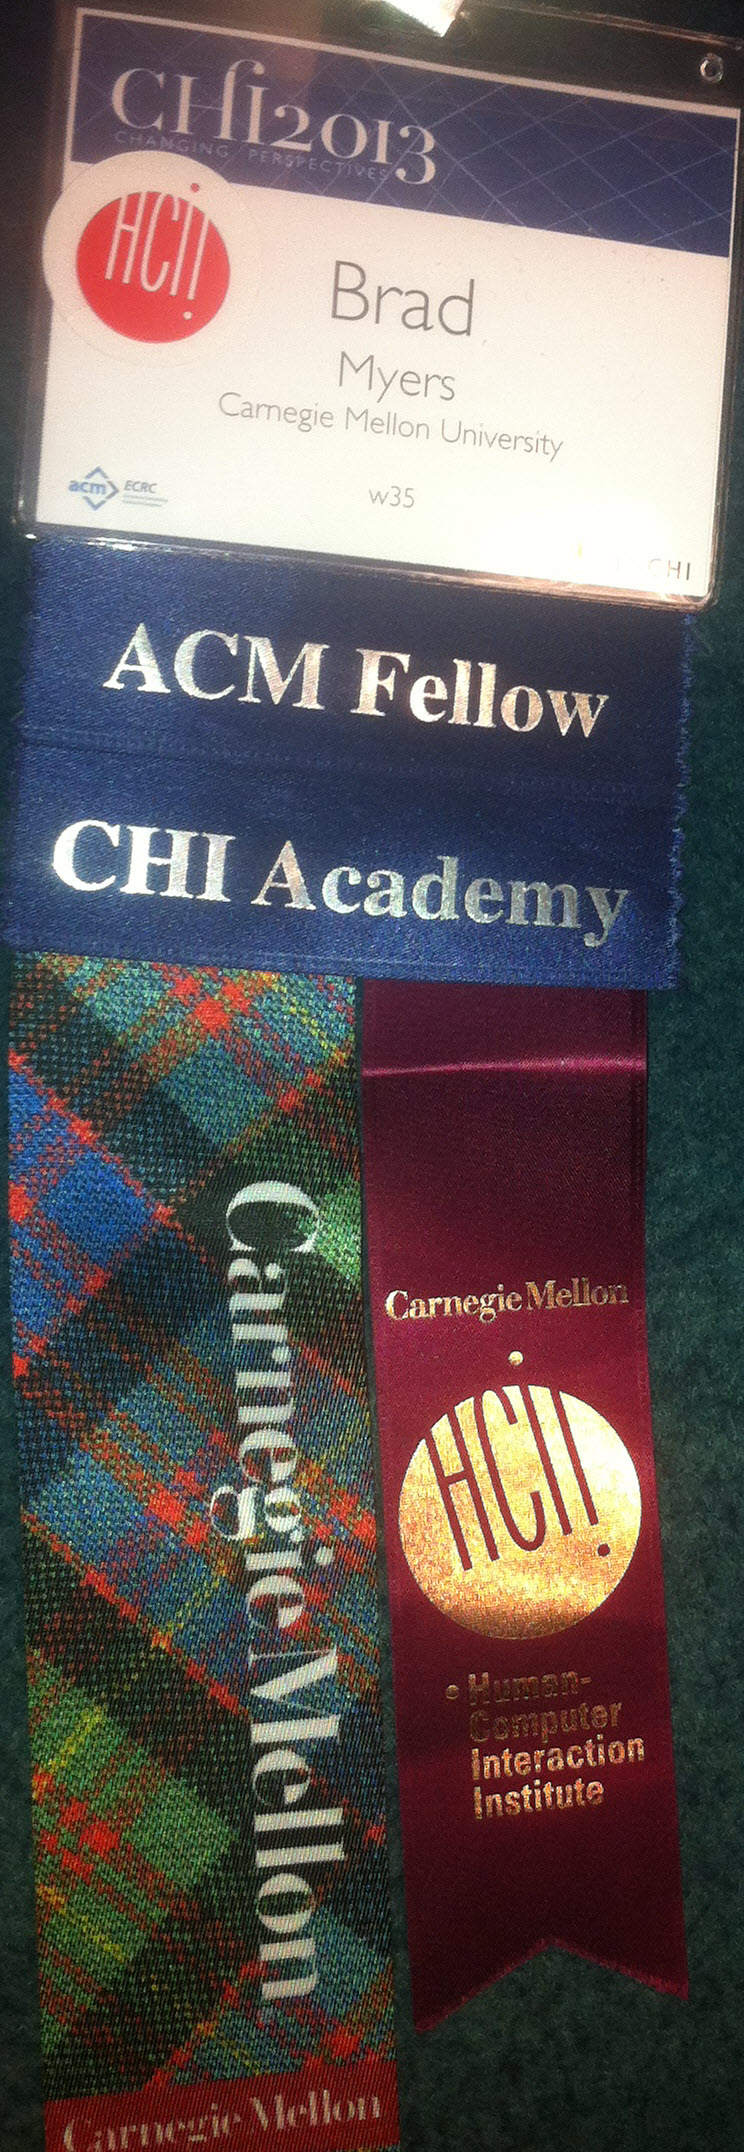 CHI'2013 Badge with Ribbons